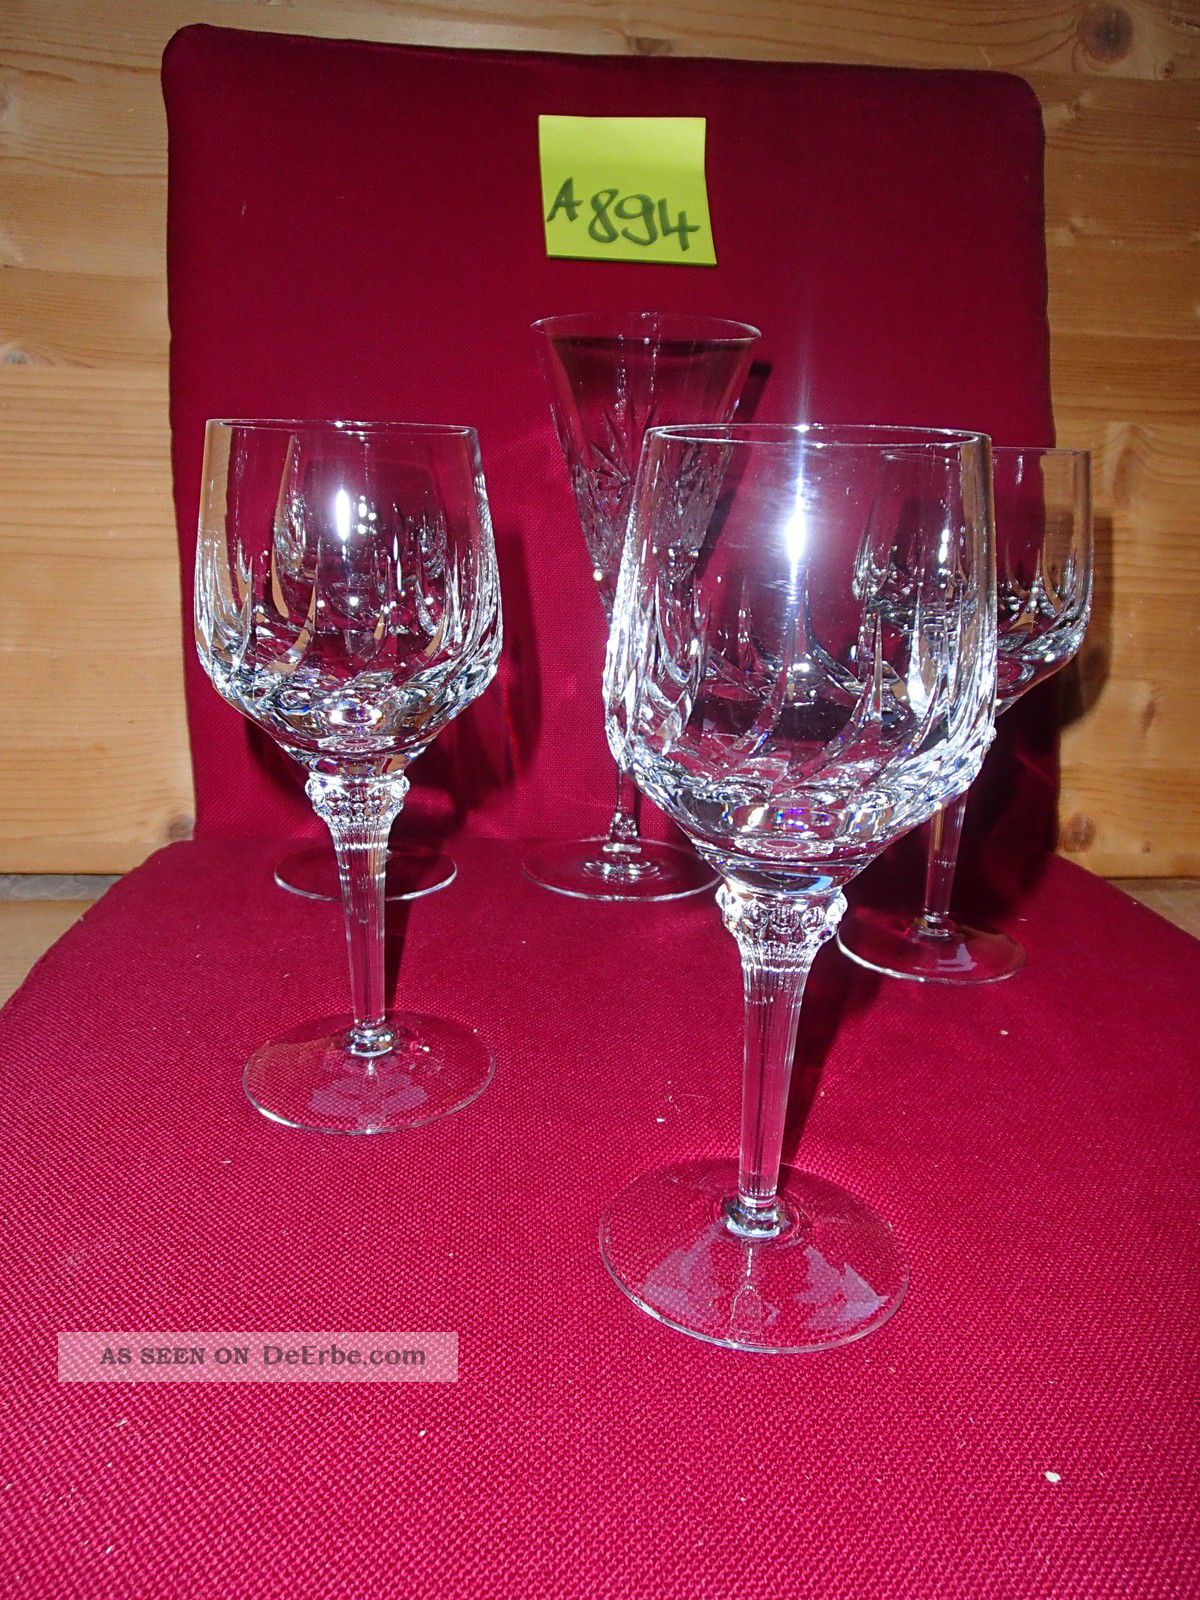 Bleikristall Geschliffen = Insgesamt 5 Gläser = 1 Sektglas,  4 Weingläser – Zust Kristall Bild